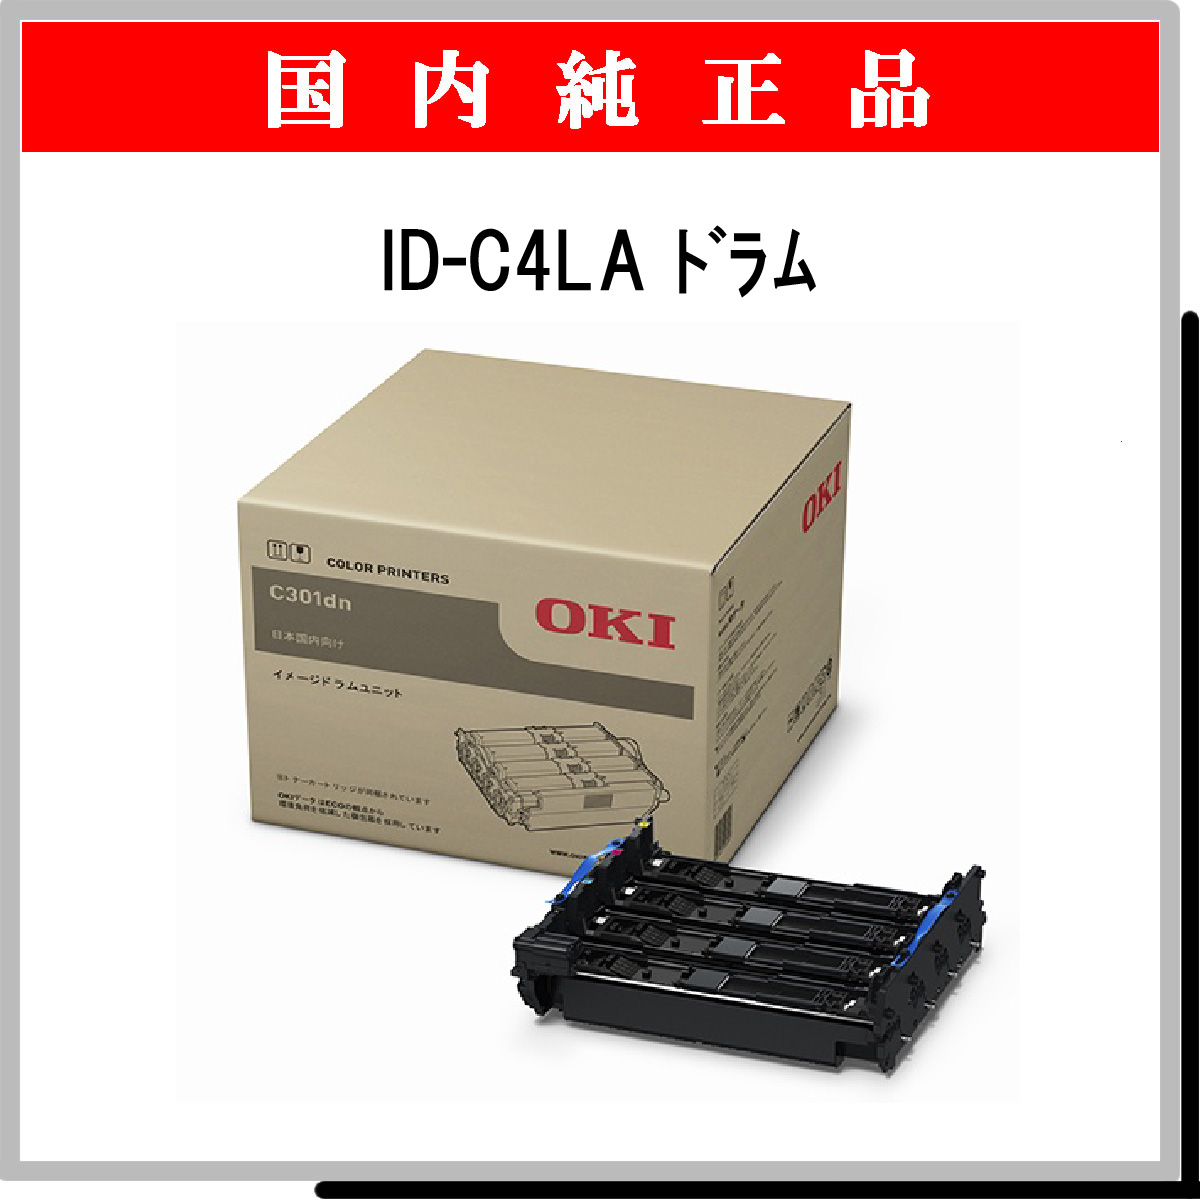 OKI イメージドラムユニット (C301dn) ID-C4LA | sport-u.com